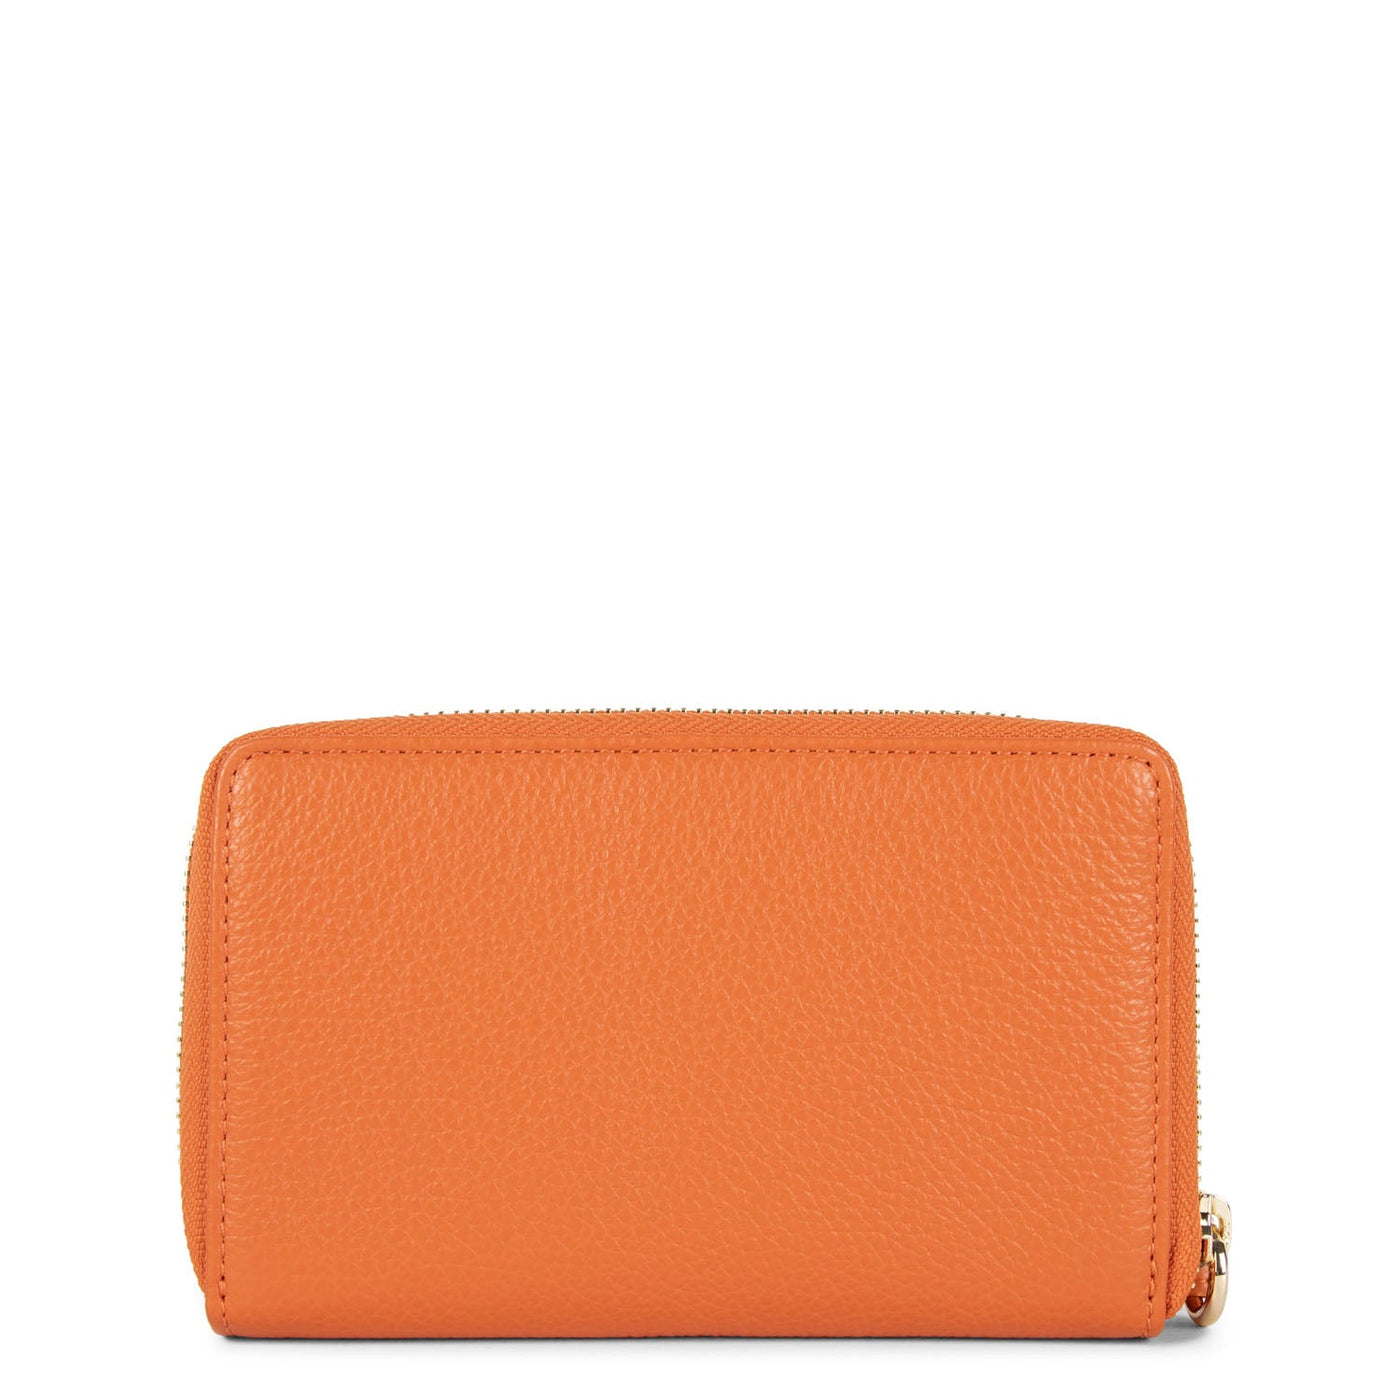 organizer wallet - dune #couleur_orange